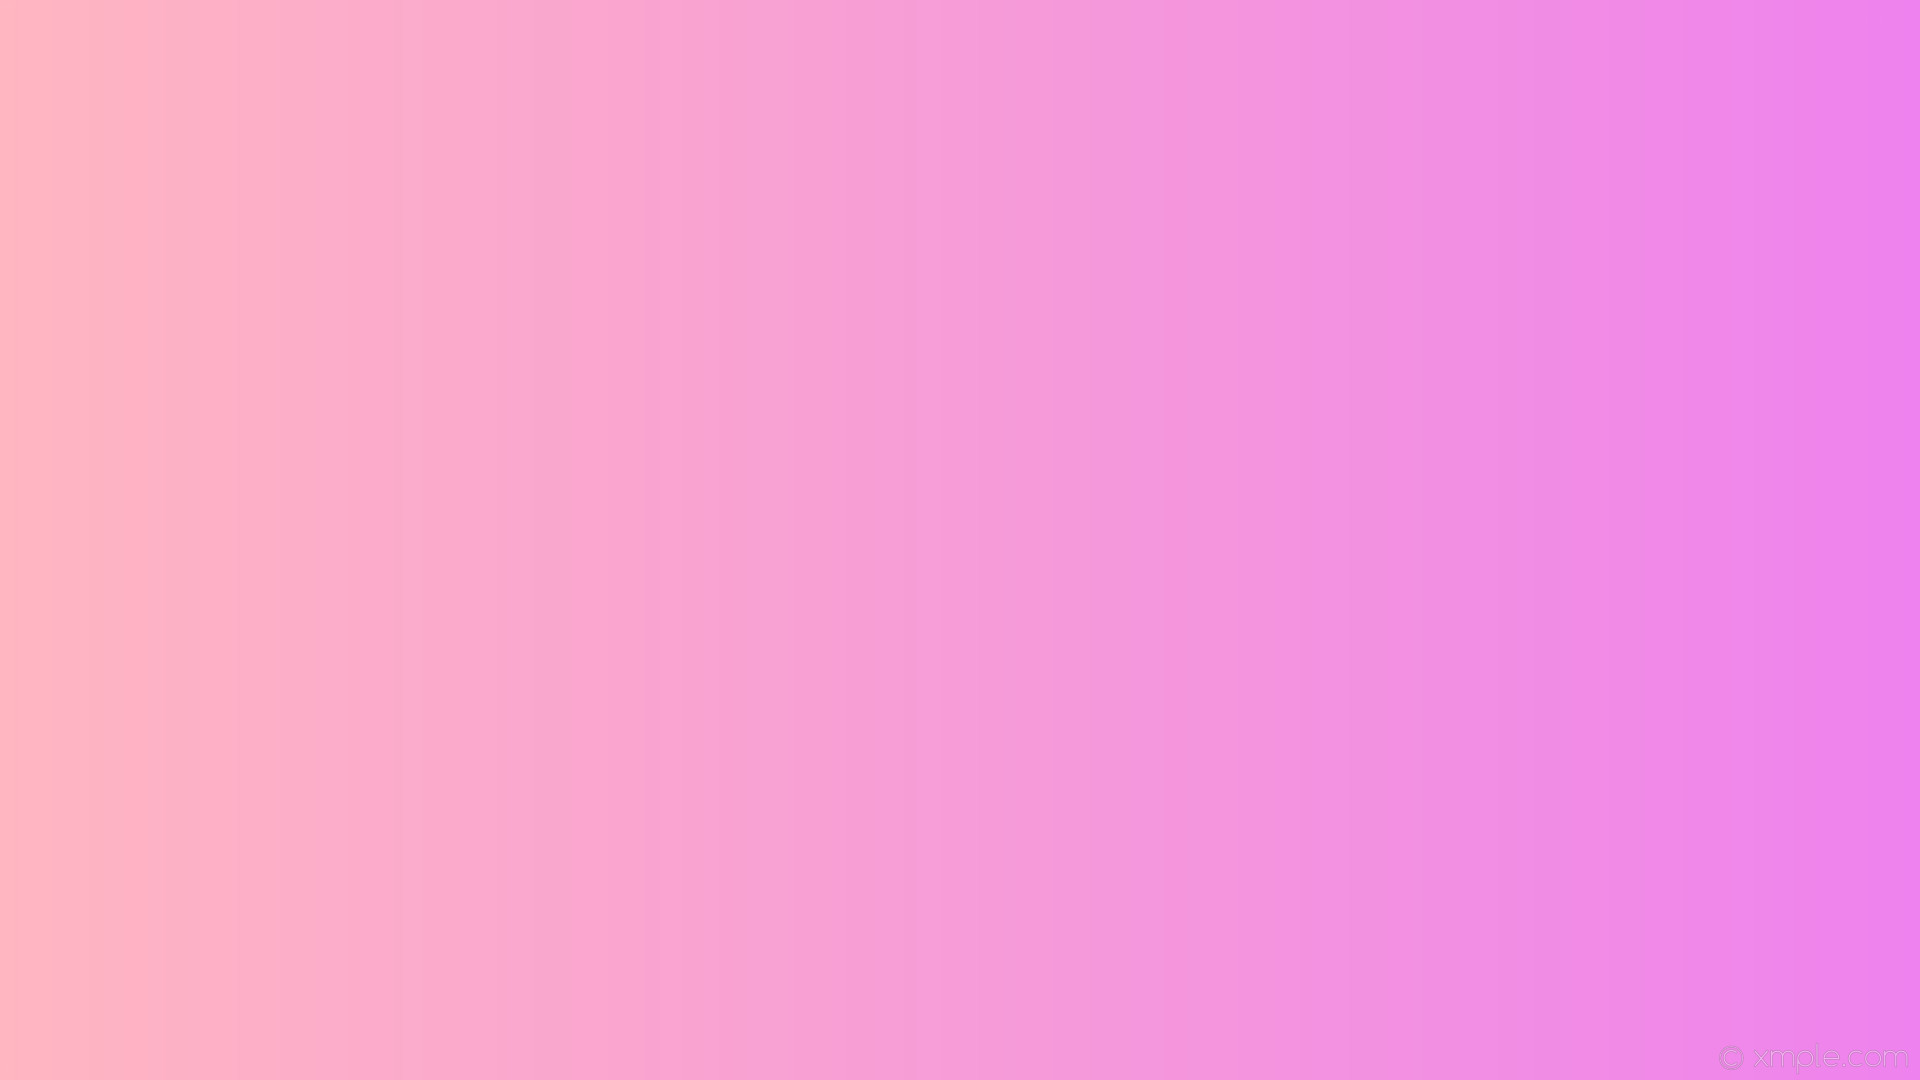 1920x1080 wallpaper pink linear purple gradient violet light pink #ee82ee #ffb6c1 0Â°